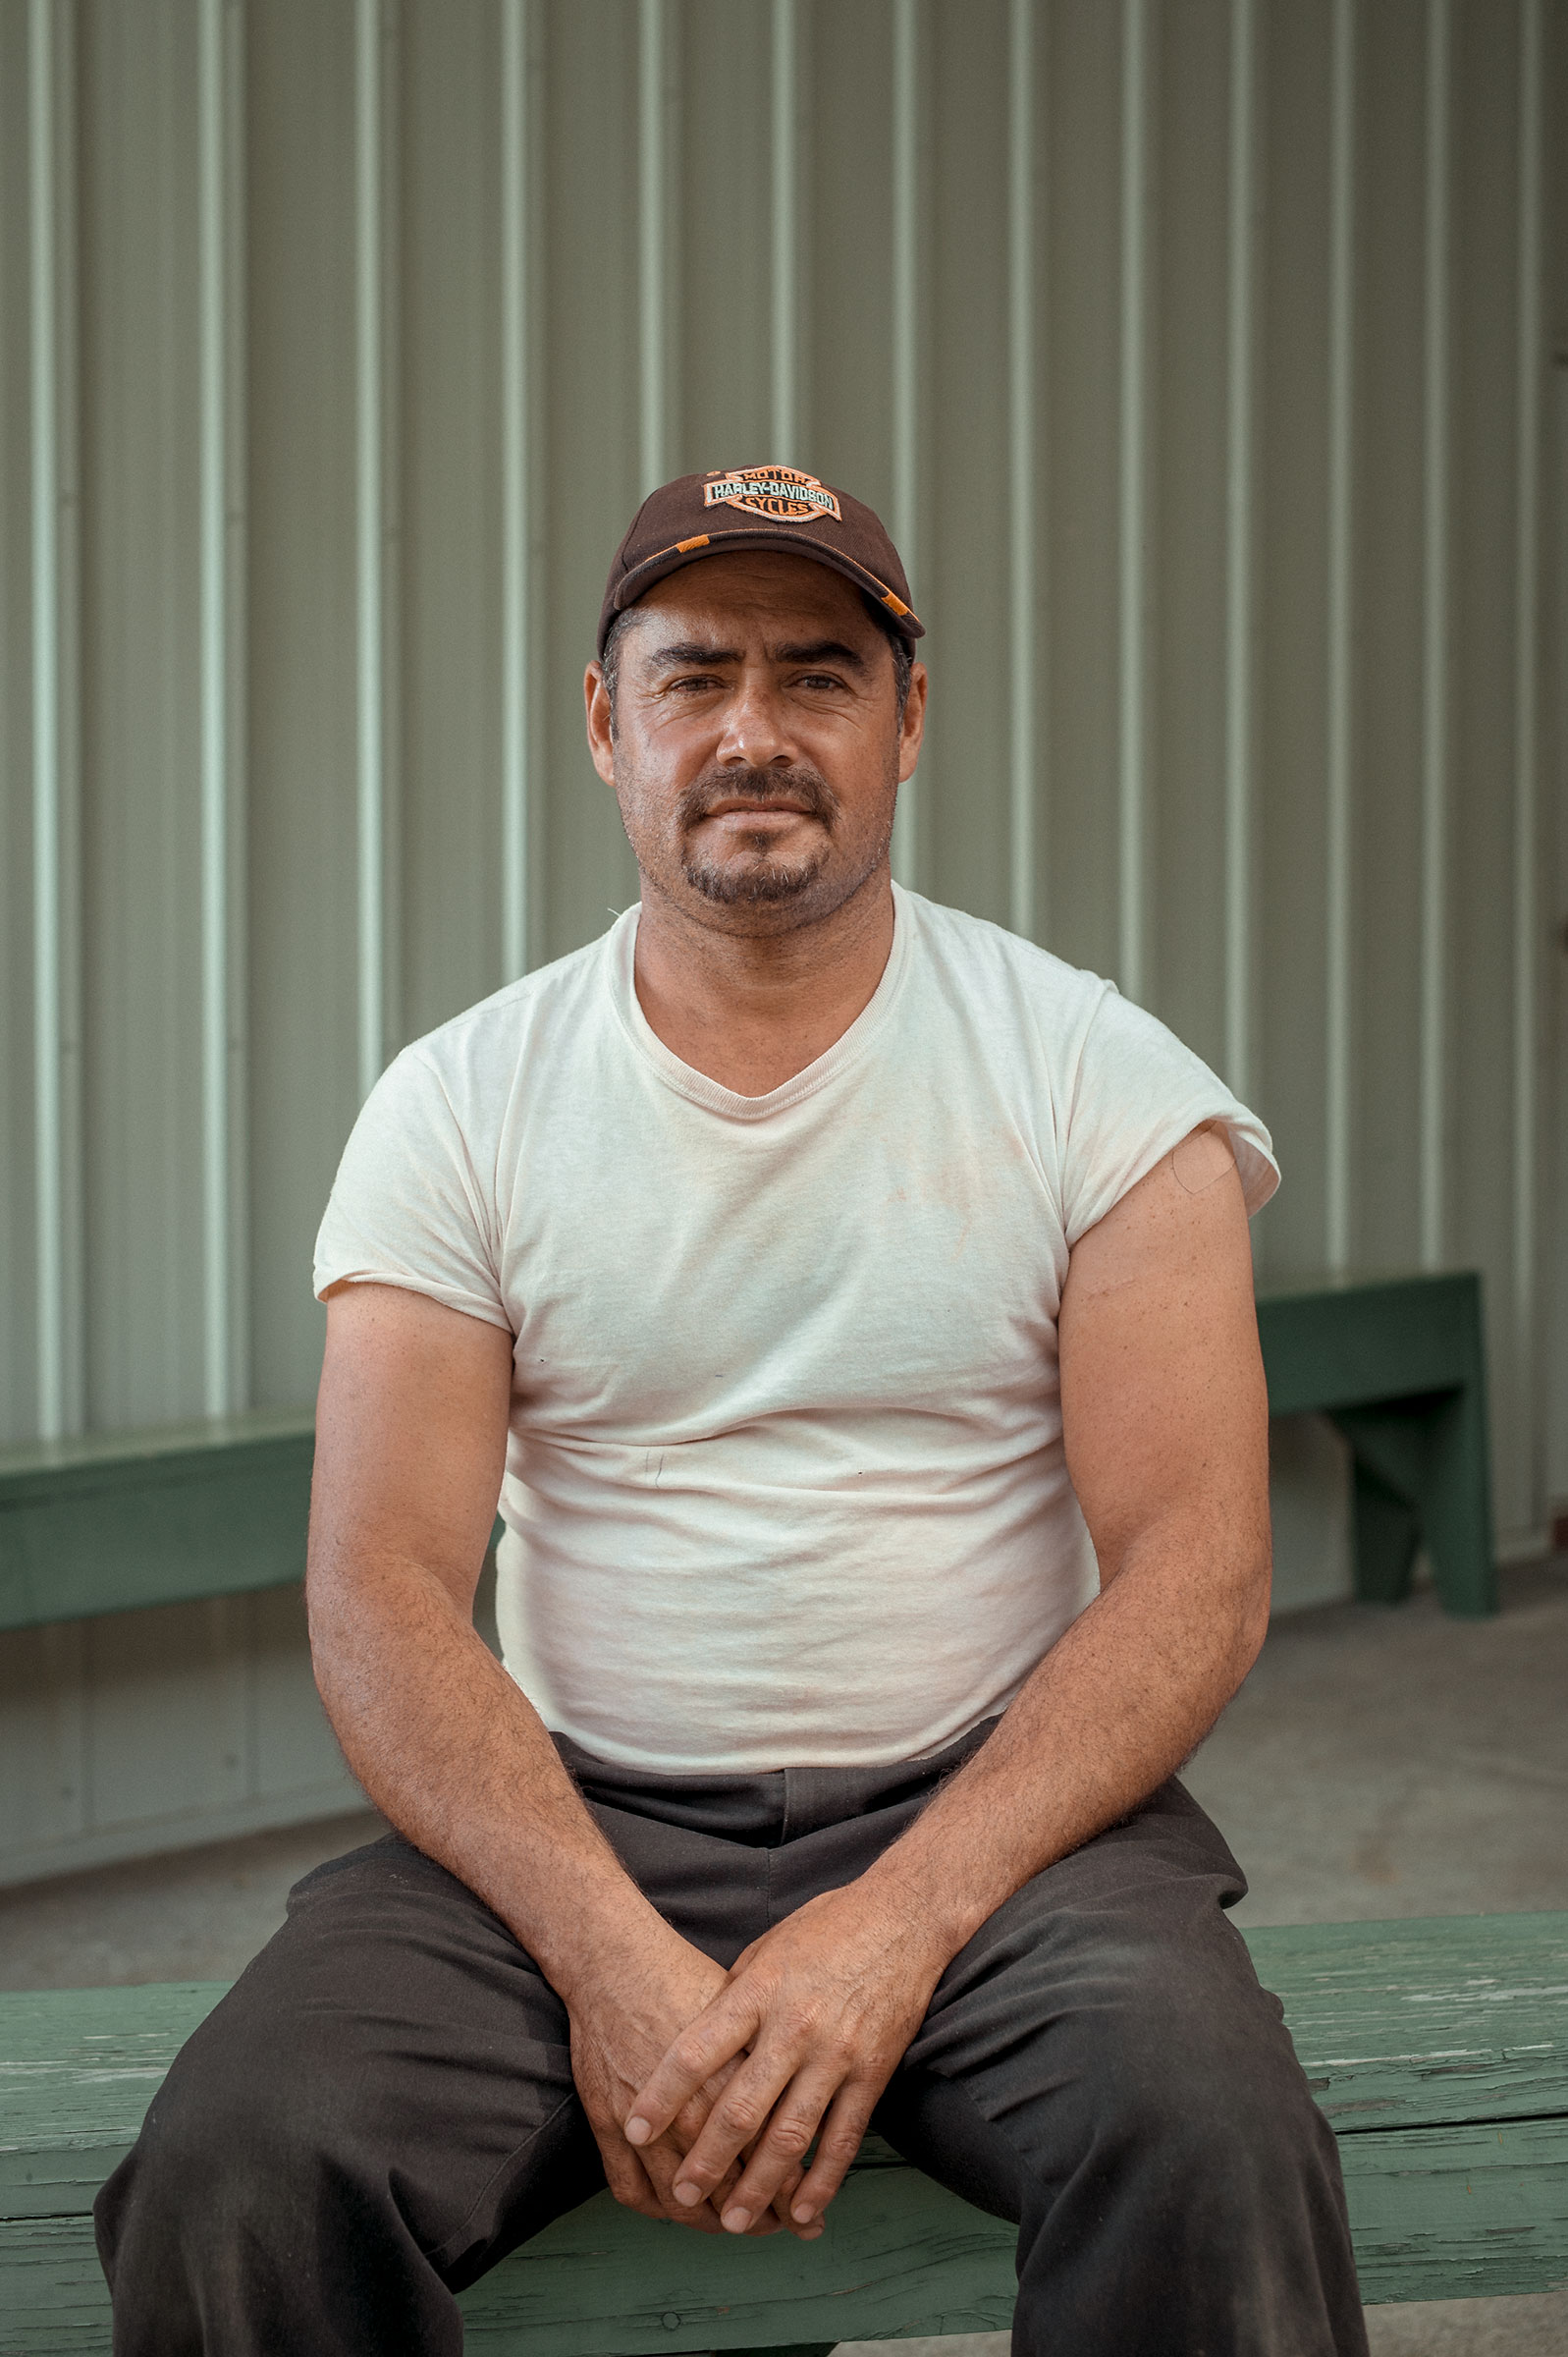 Arturo Gamiño, an employee of Jones and Church Farms tomato farm, poses for a portrait at the farm